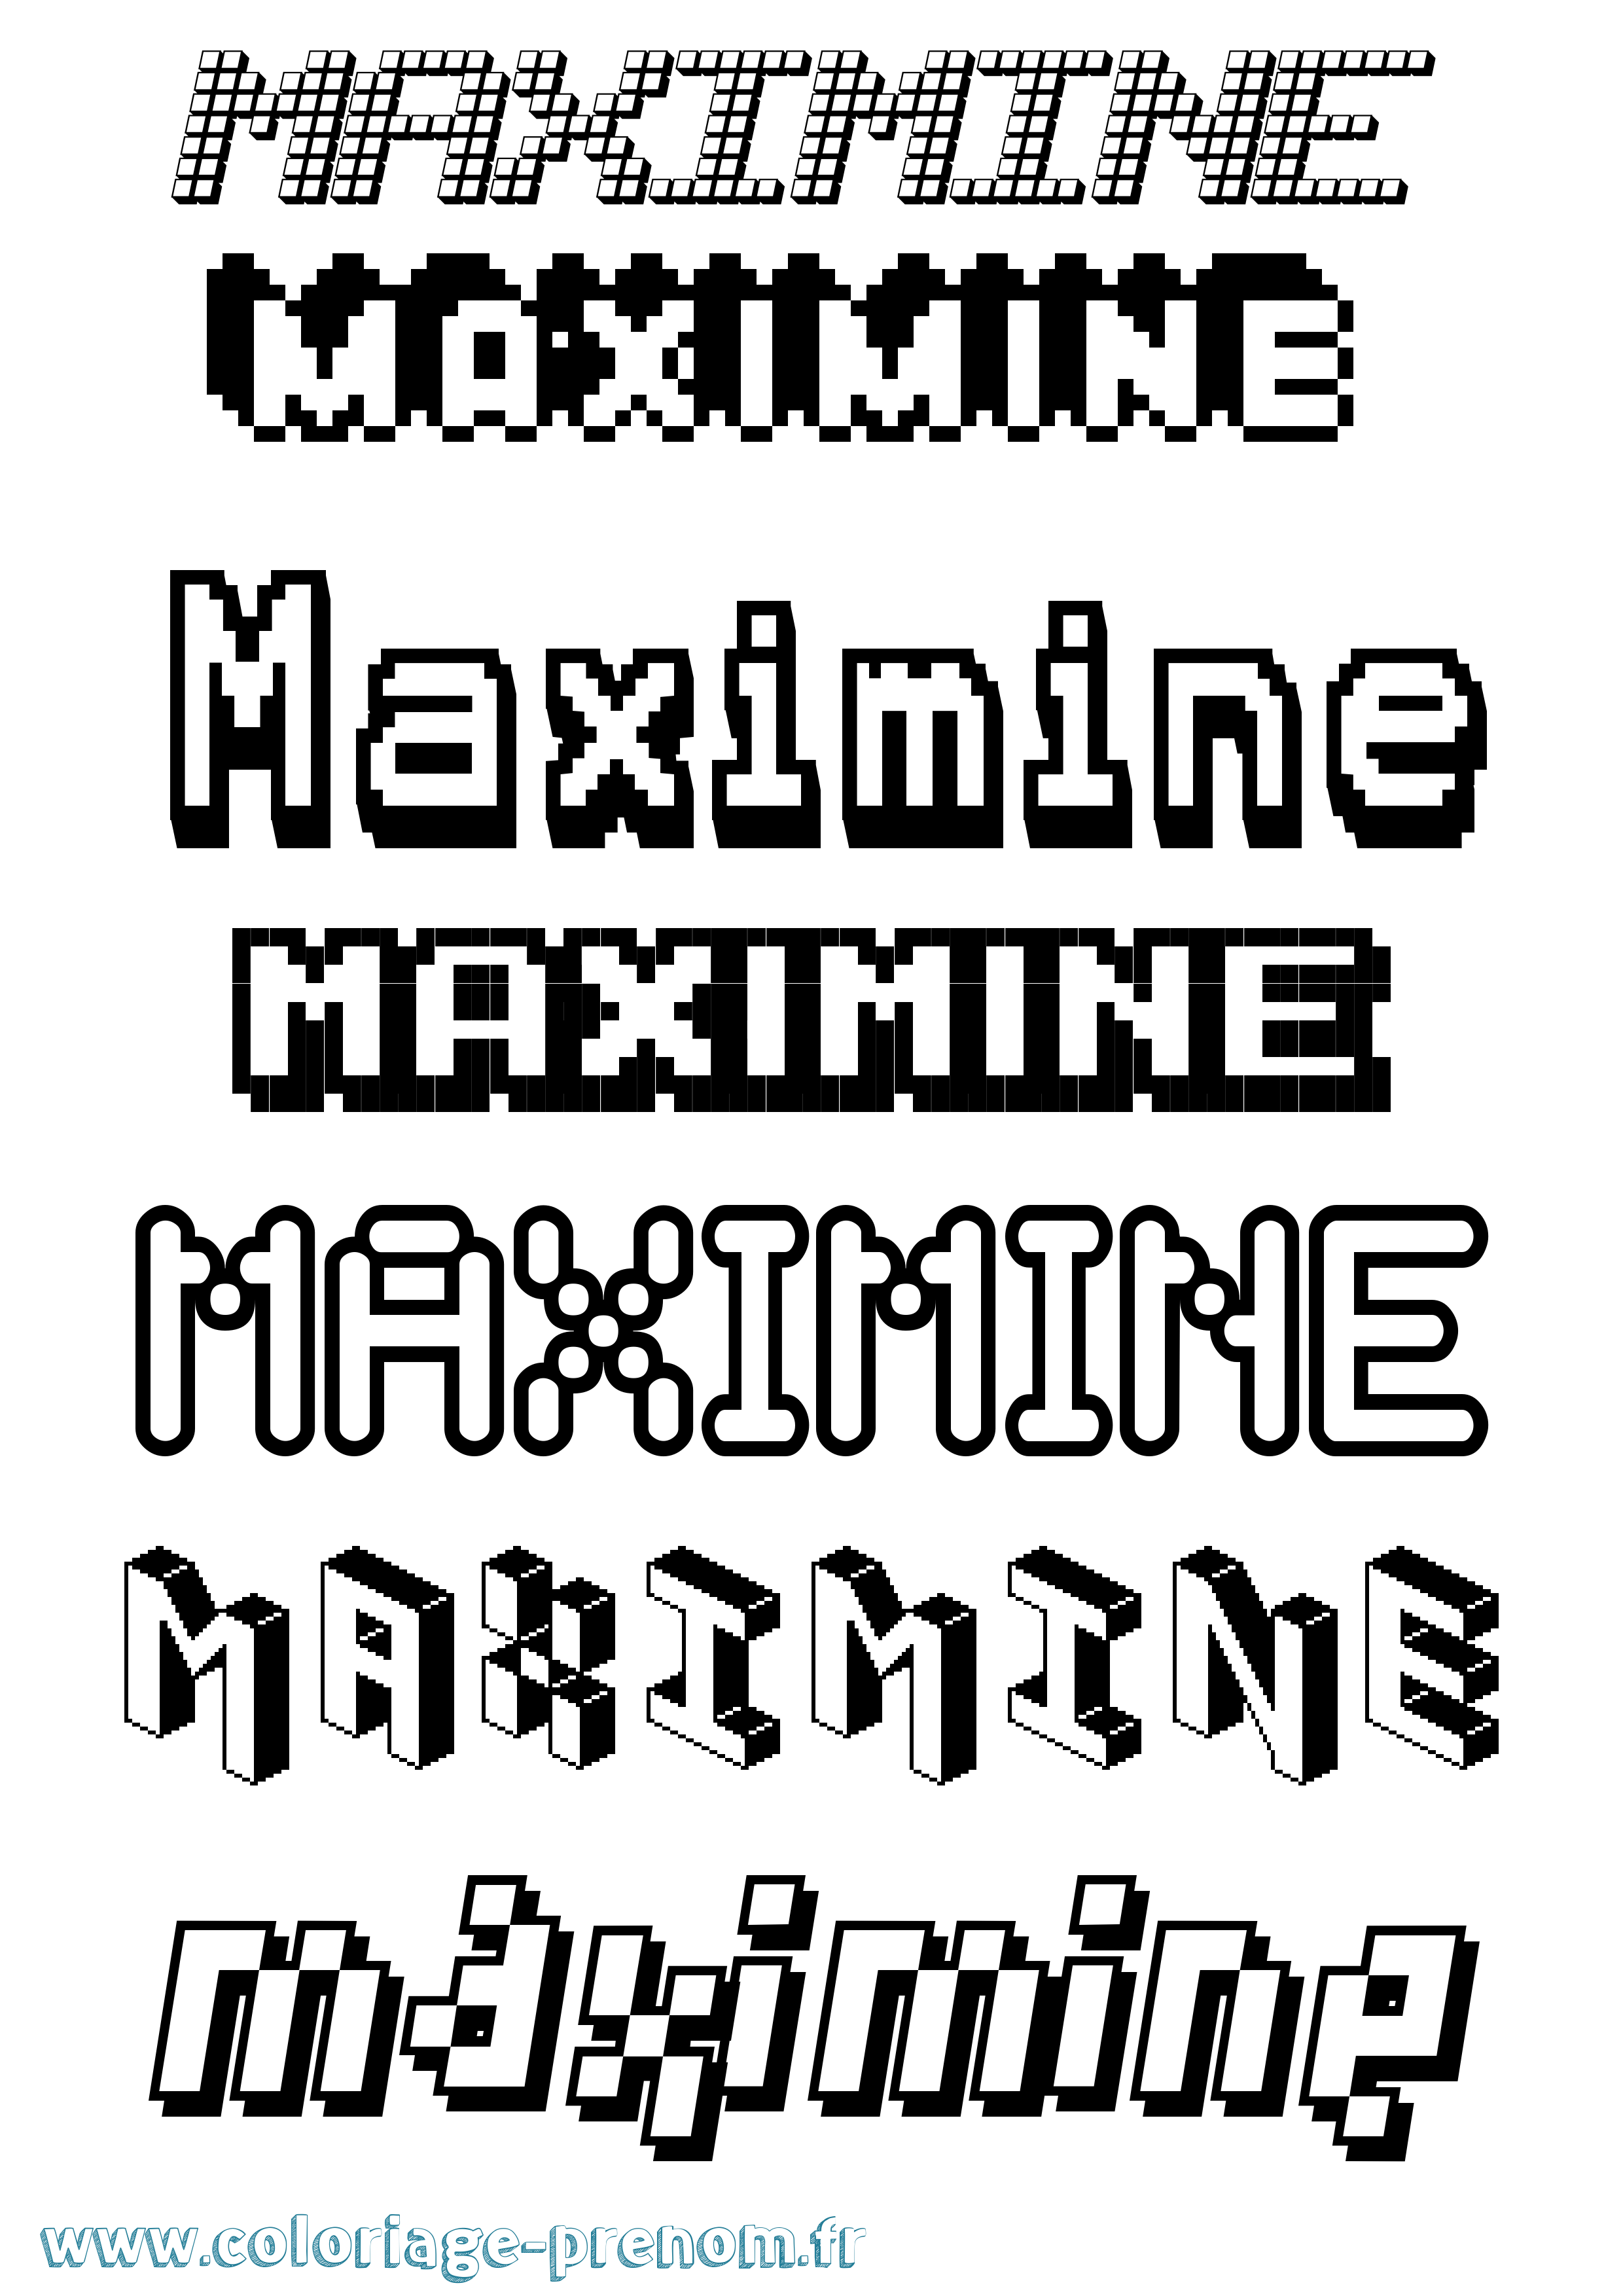 Coloriage prénom Maximine Pixel